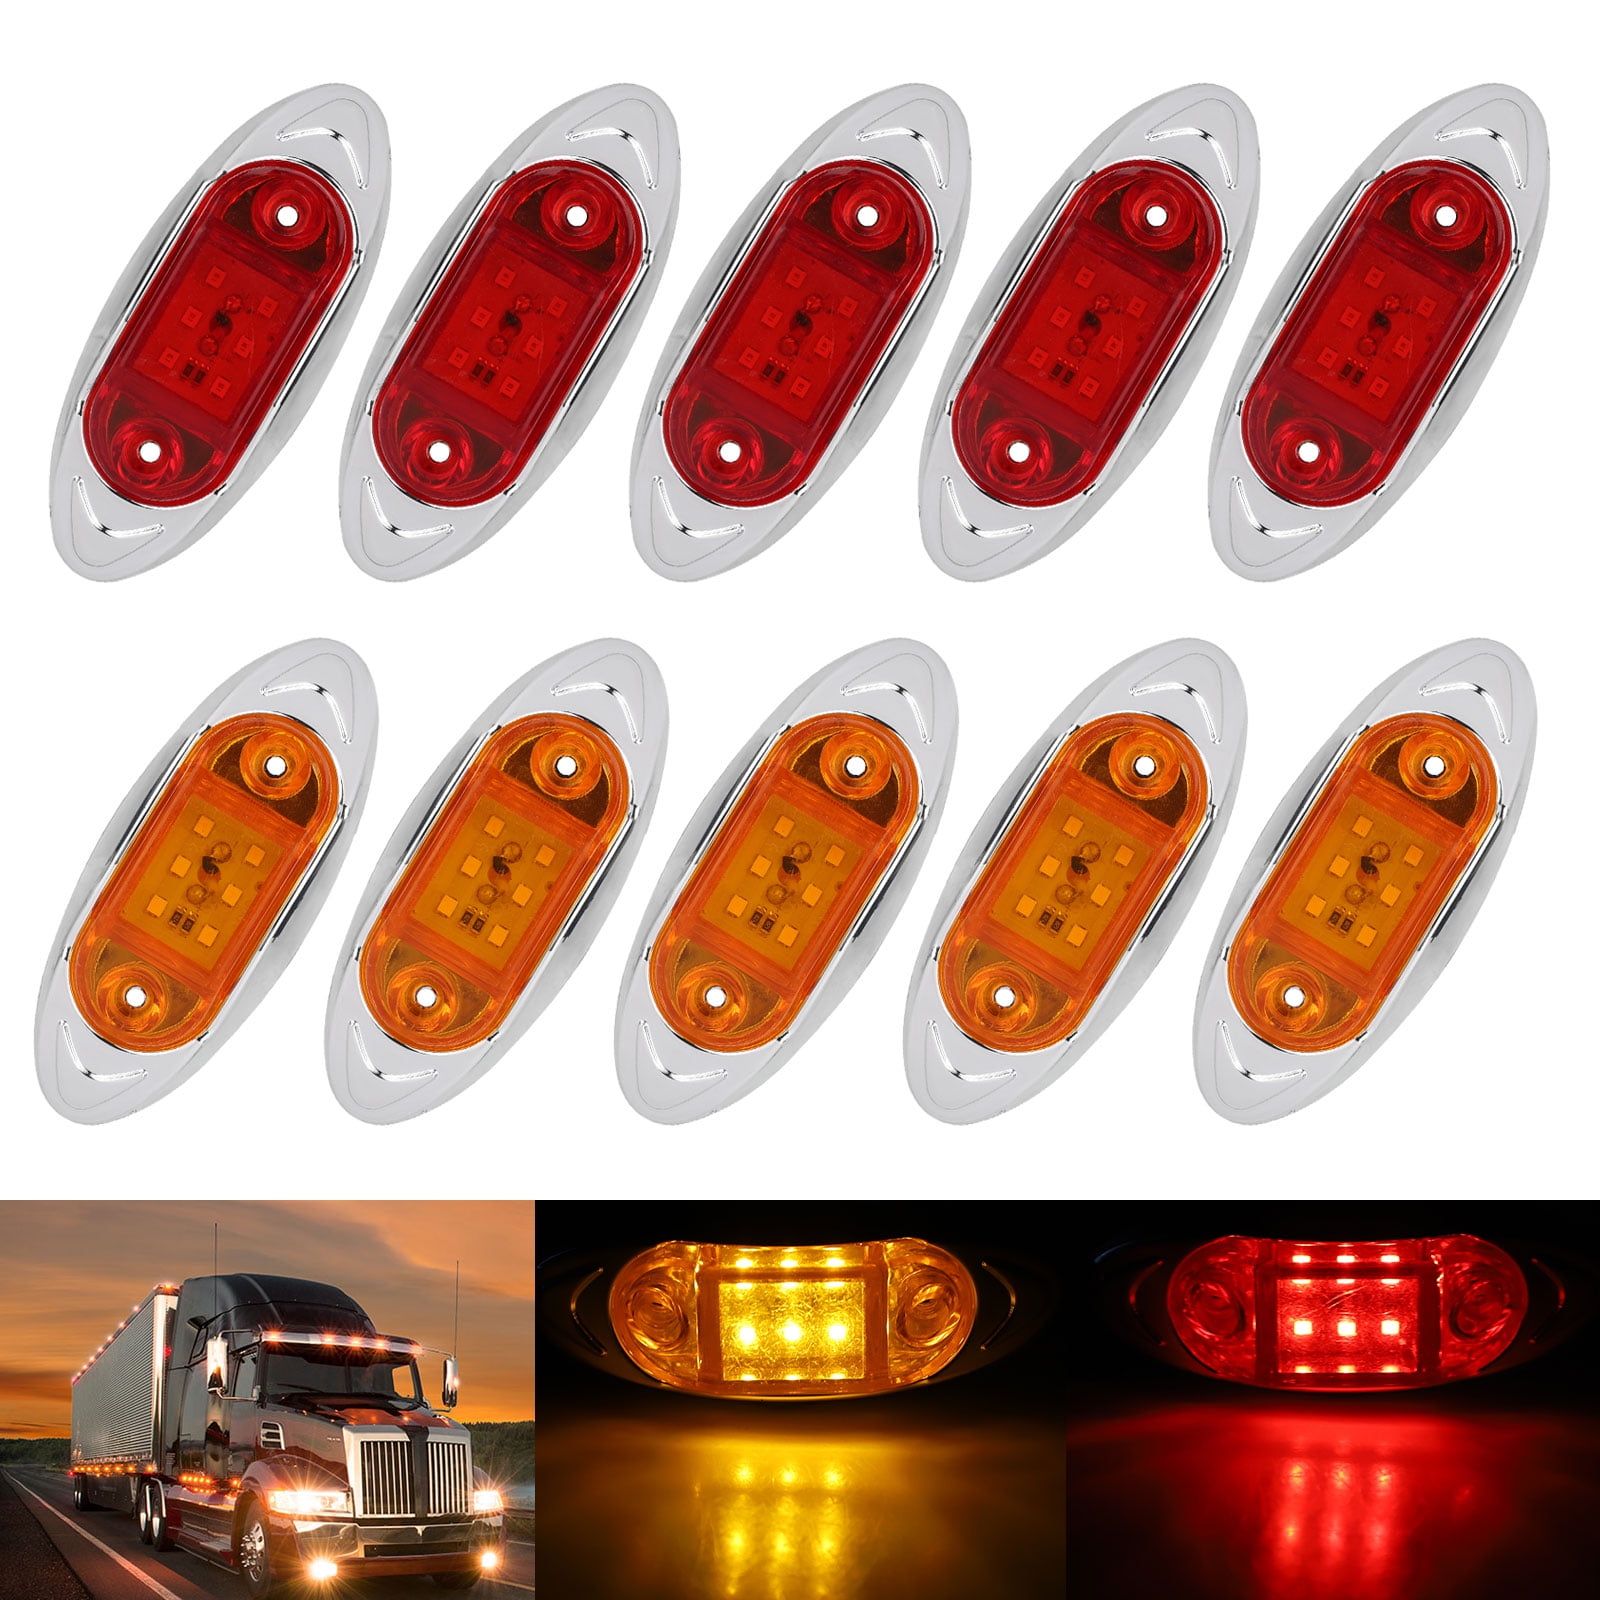 10Amber 10Red 4" 8LED Indicators Truck Trailer Bus Side Marker Indicators Light 